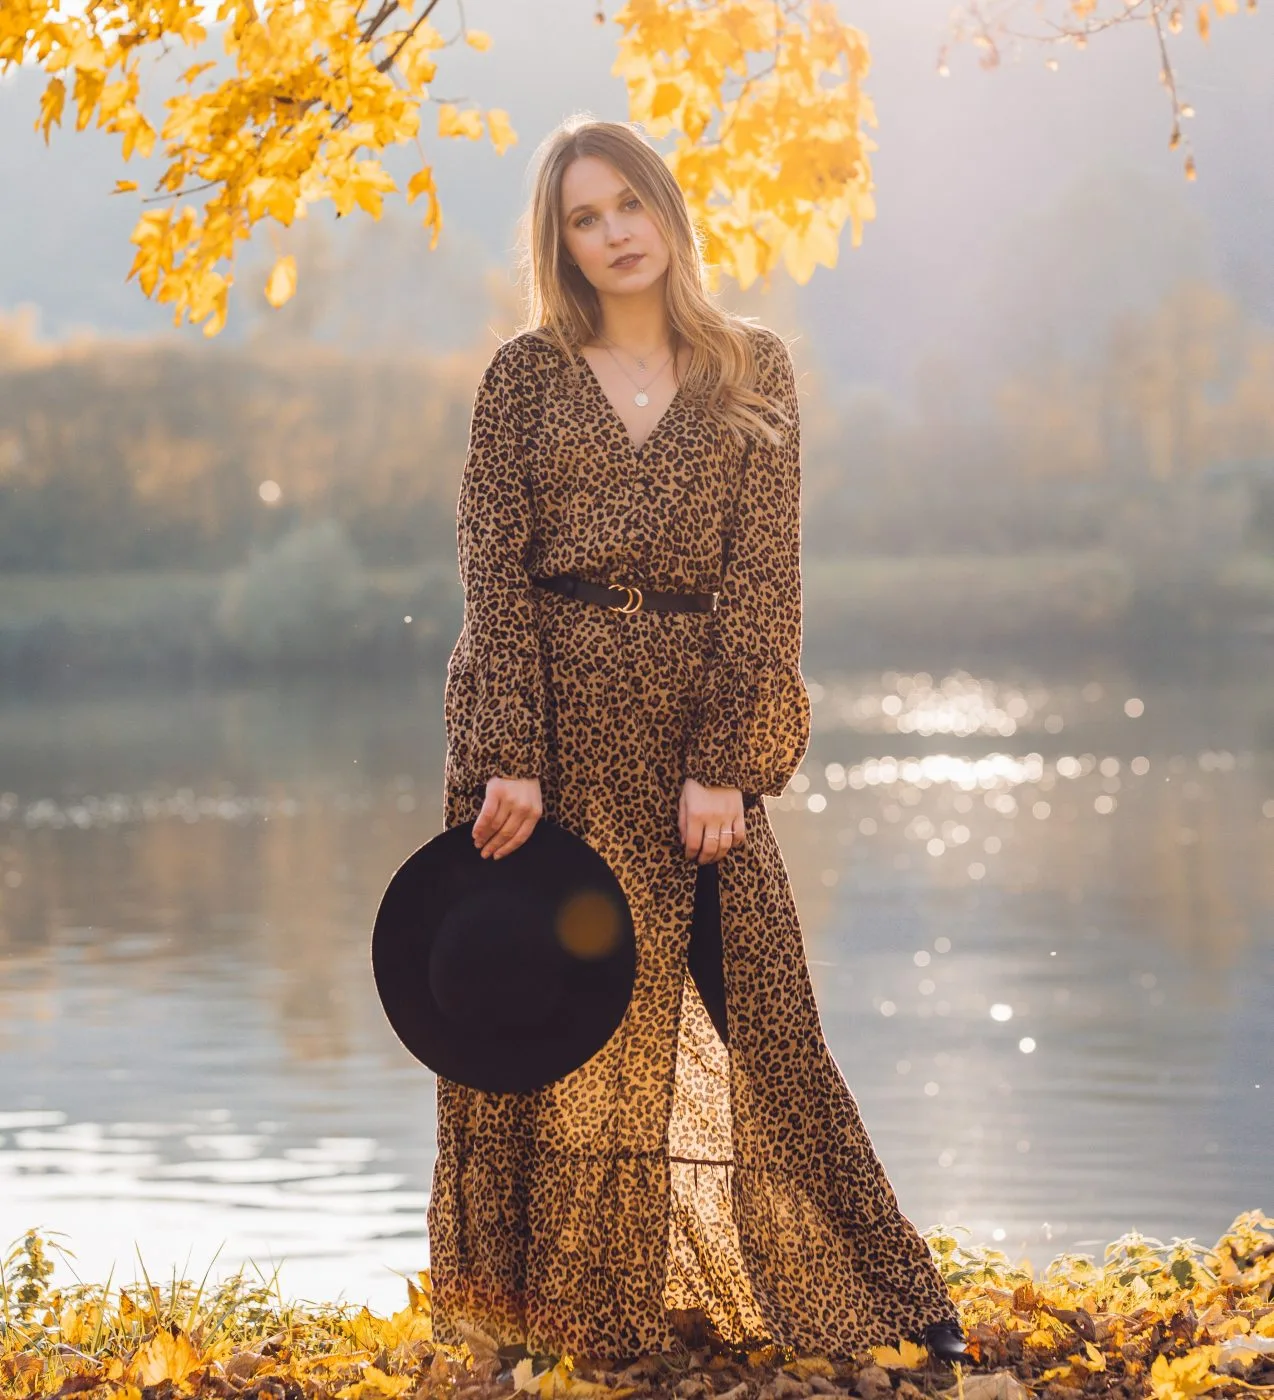 Boho Herbst Outfit Ideen - Die besten Herbst Outfits im Bohemian Style